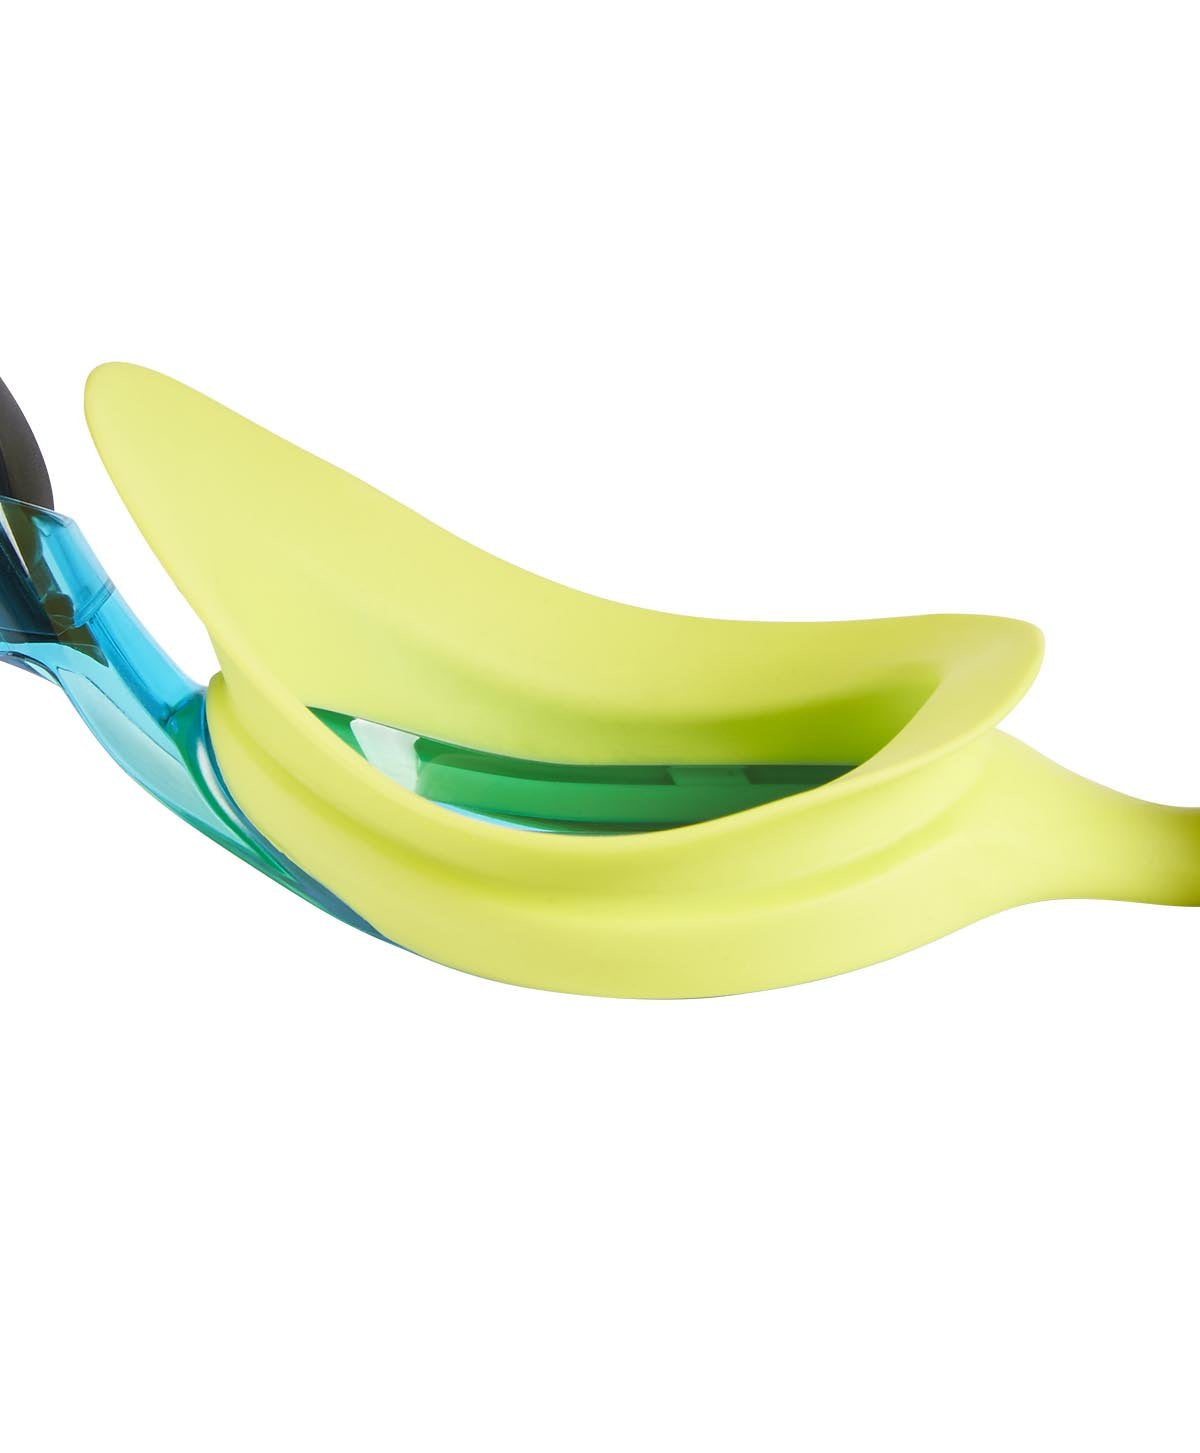 Speedo Vue Mirror AU V-Class Blend Swimming Goggle, Free Size Green/Blue - Best Price online Prokicksports.com